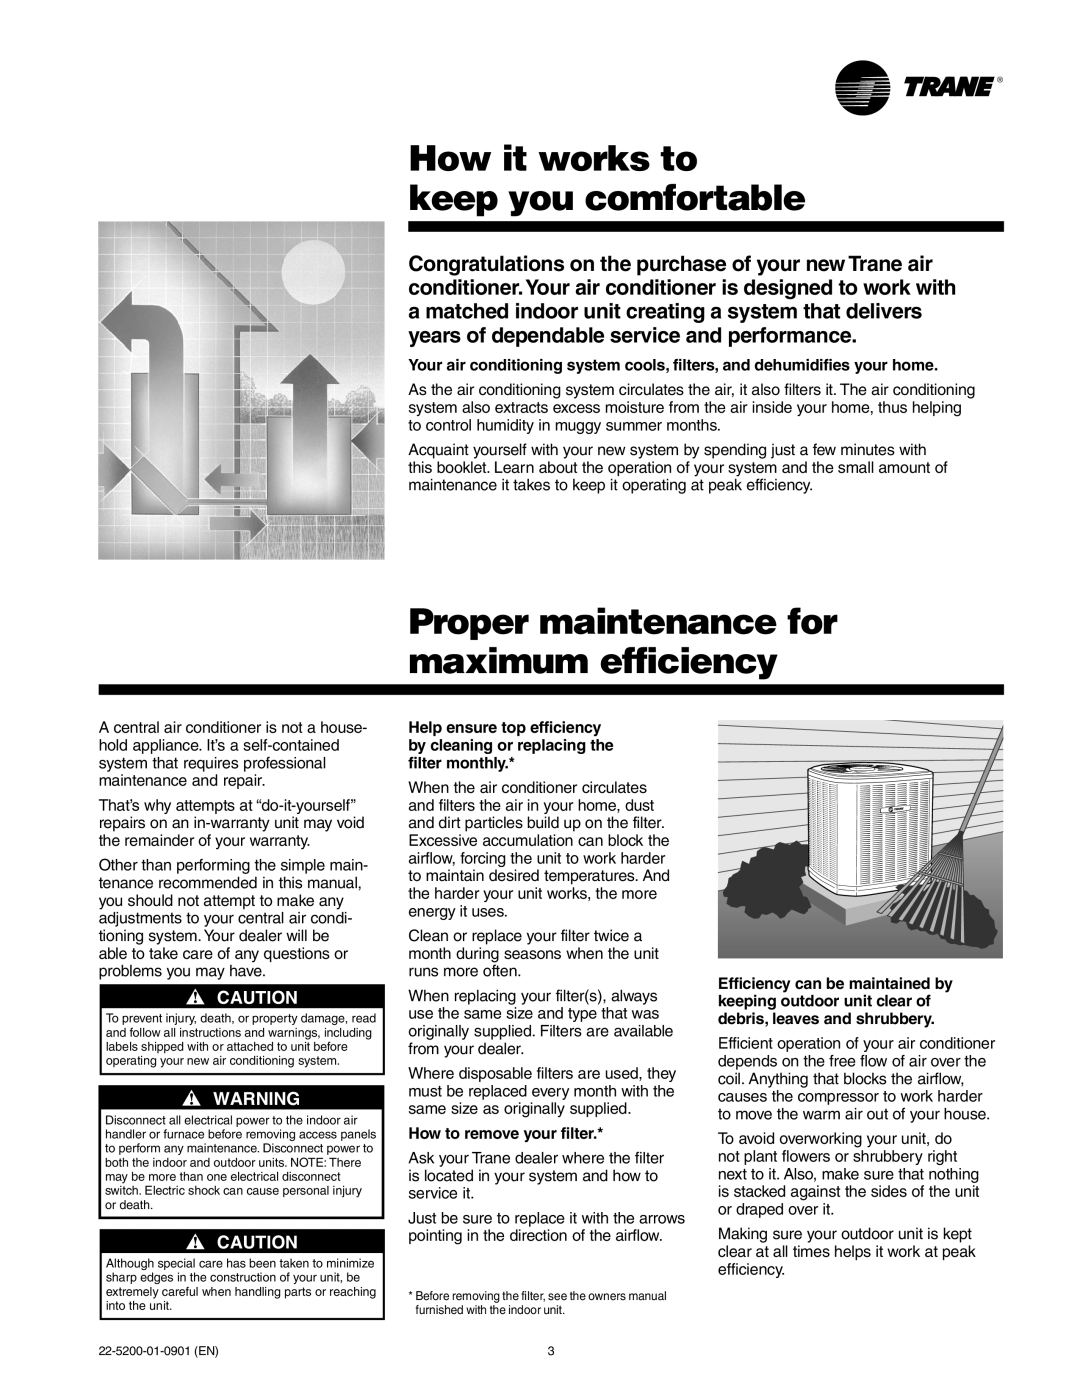 Trane 22-5200-01-0901 (EN) manual How it works to keep you comfortable, Proper maintenance for maximum efficiency 